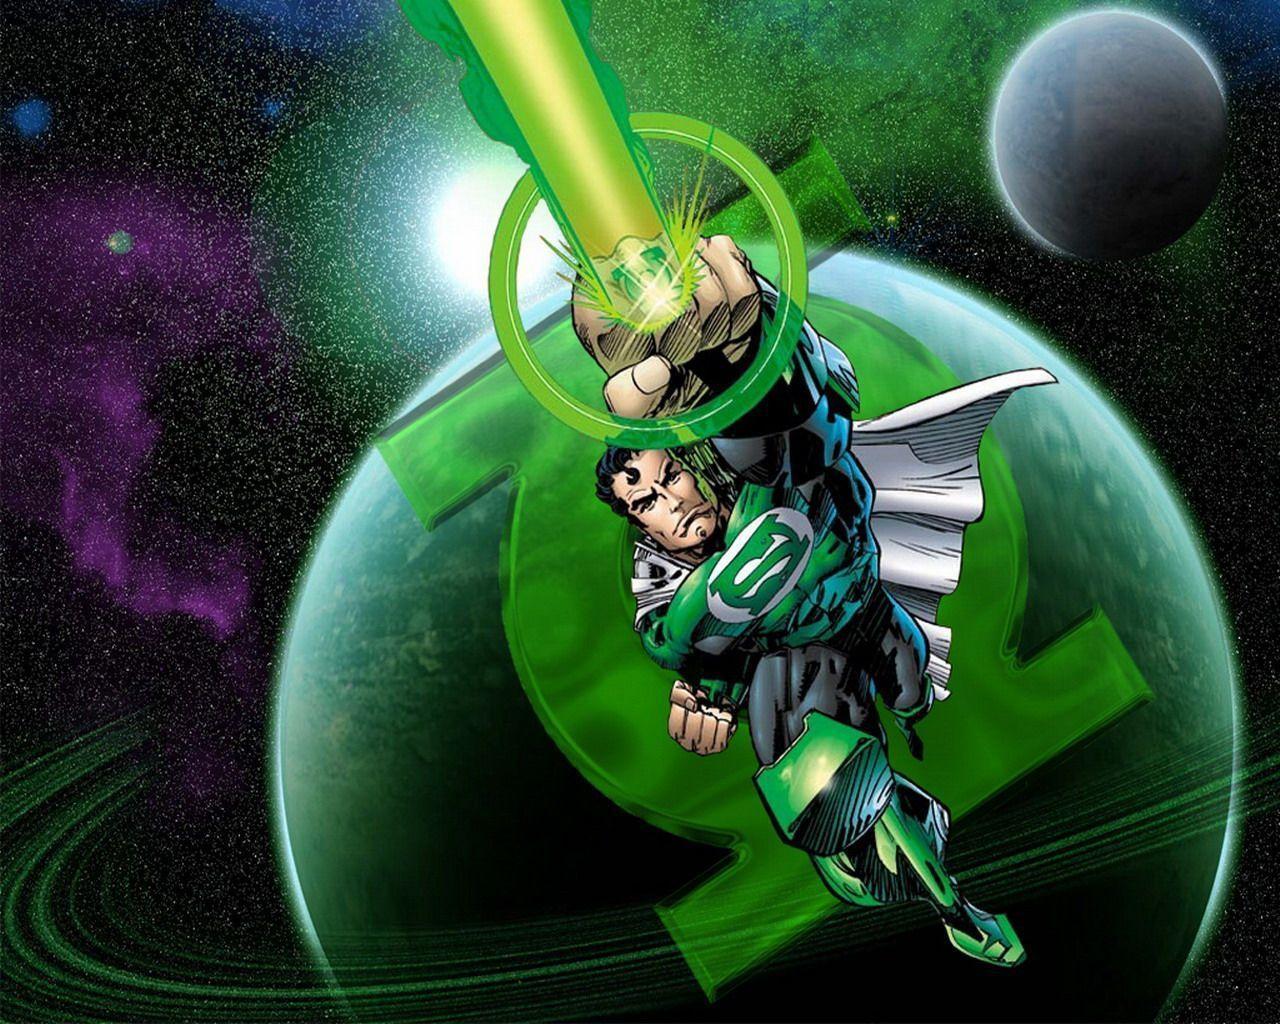 More Green Lantern wallpaper. DC Comics wallpaper